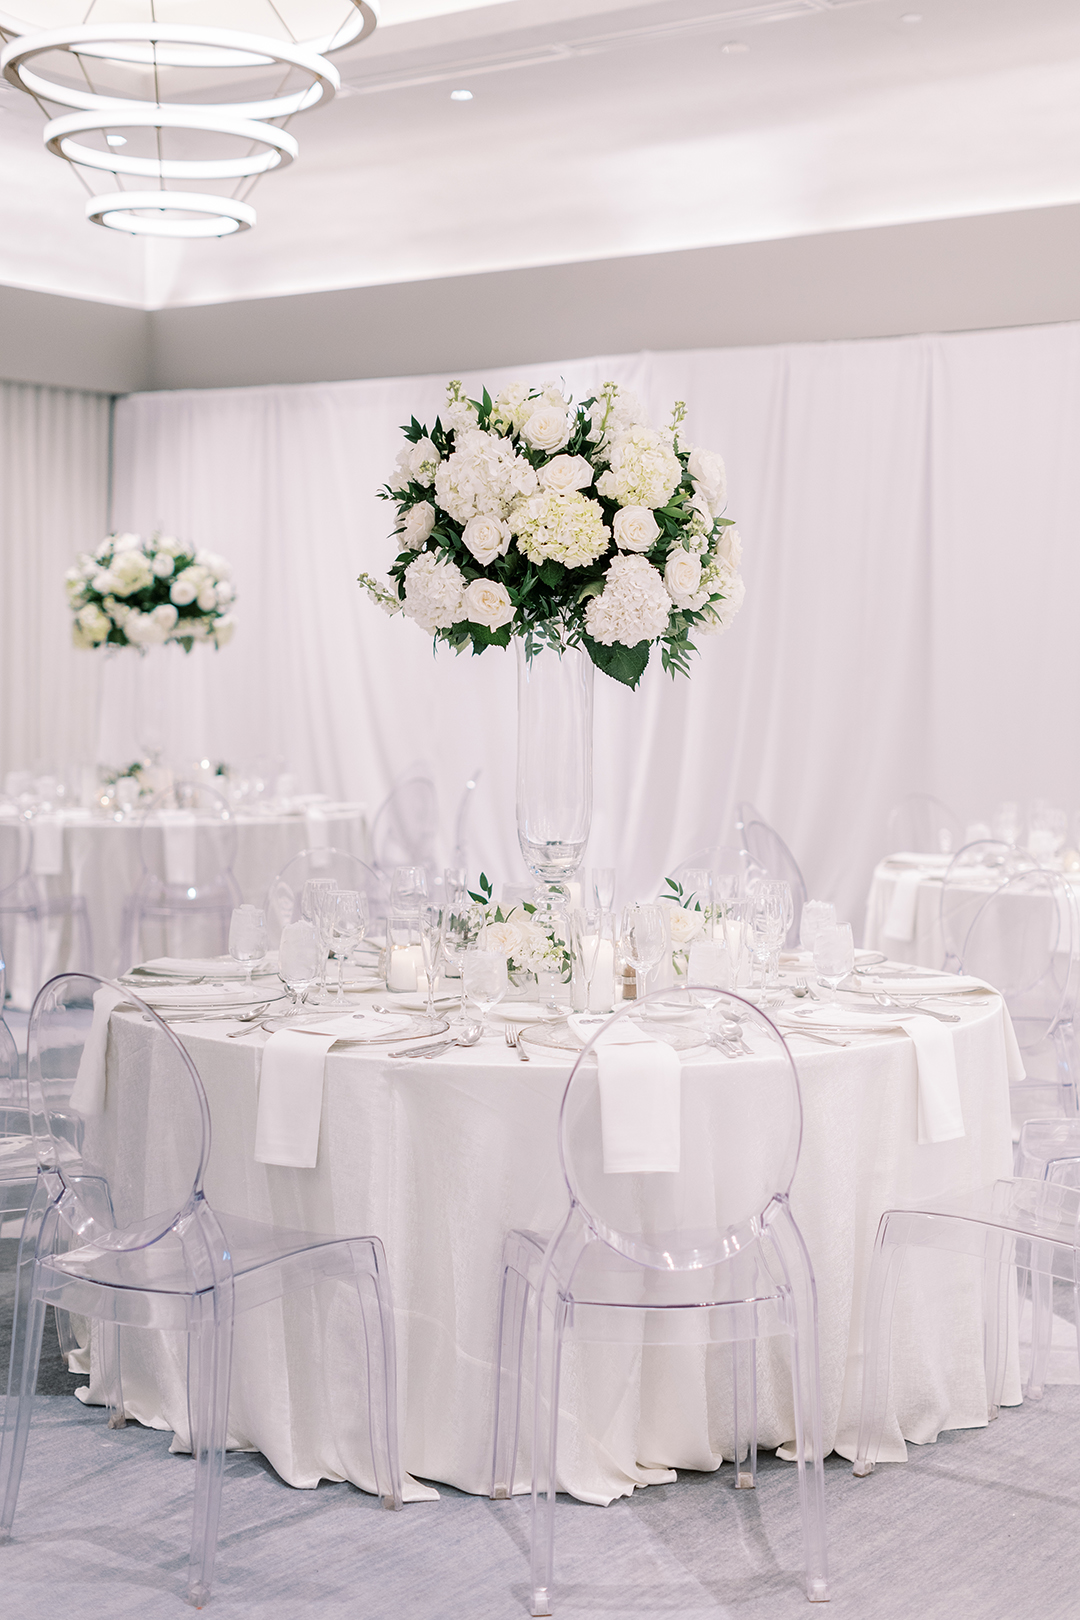 Scottsdale Wedding Magazine - image showing wedding reception in all white ballroom